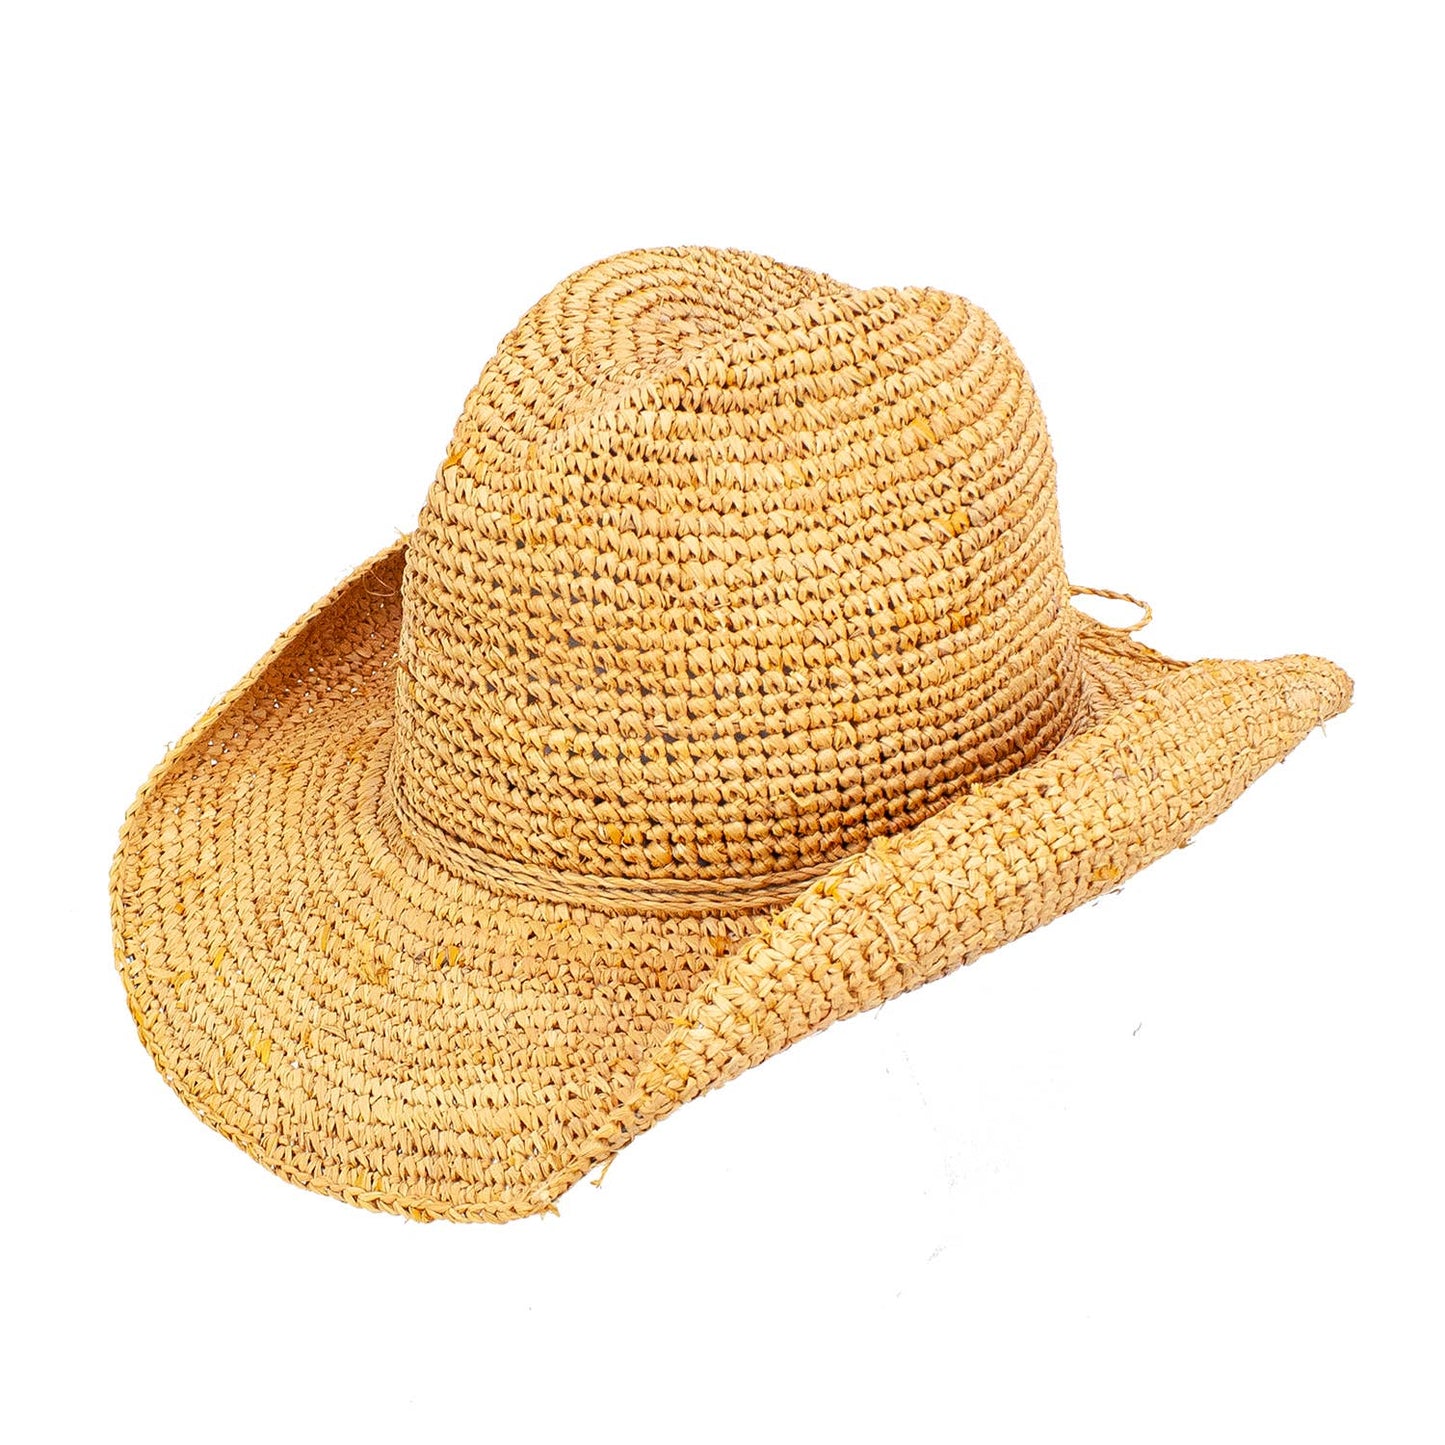 Peter Grimm Tania Western Cowboy Hat